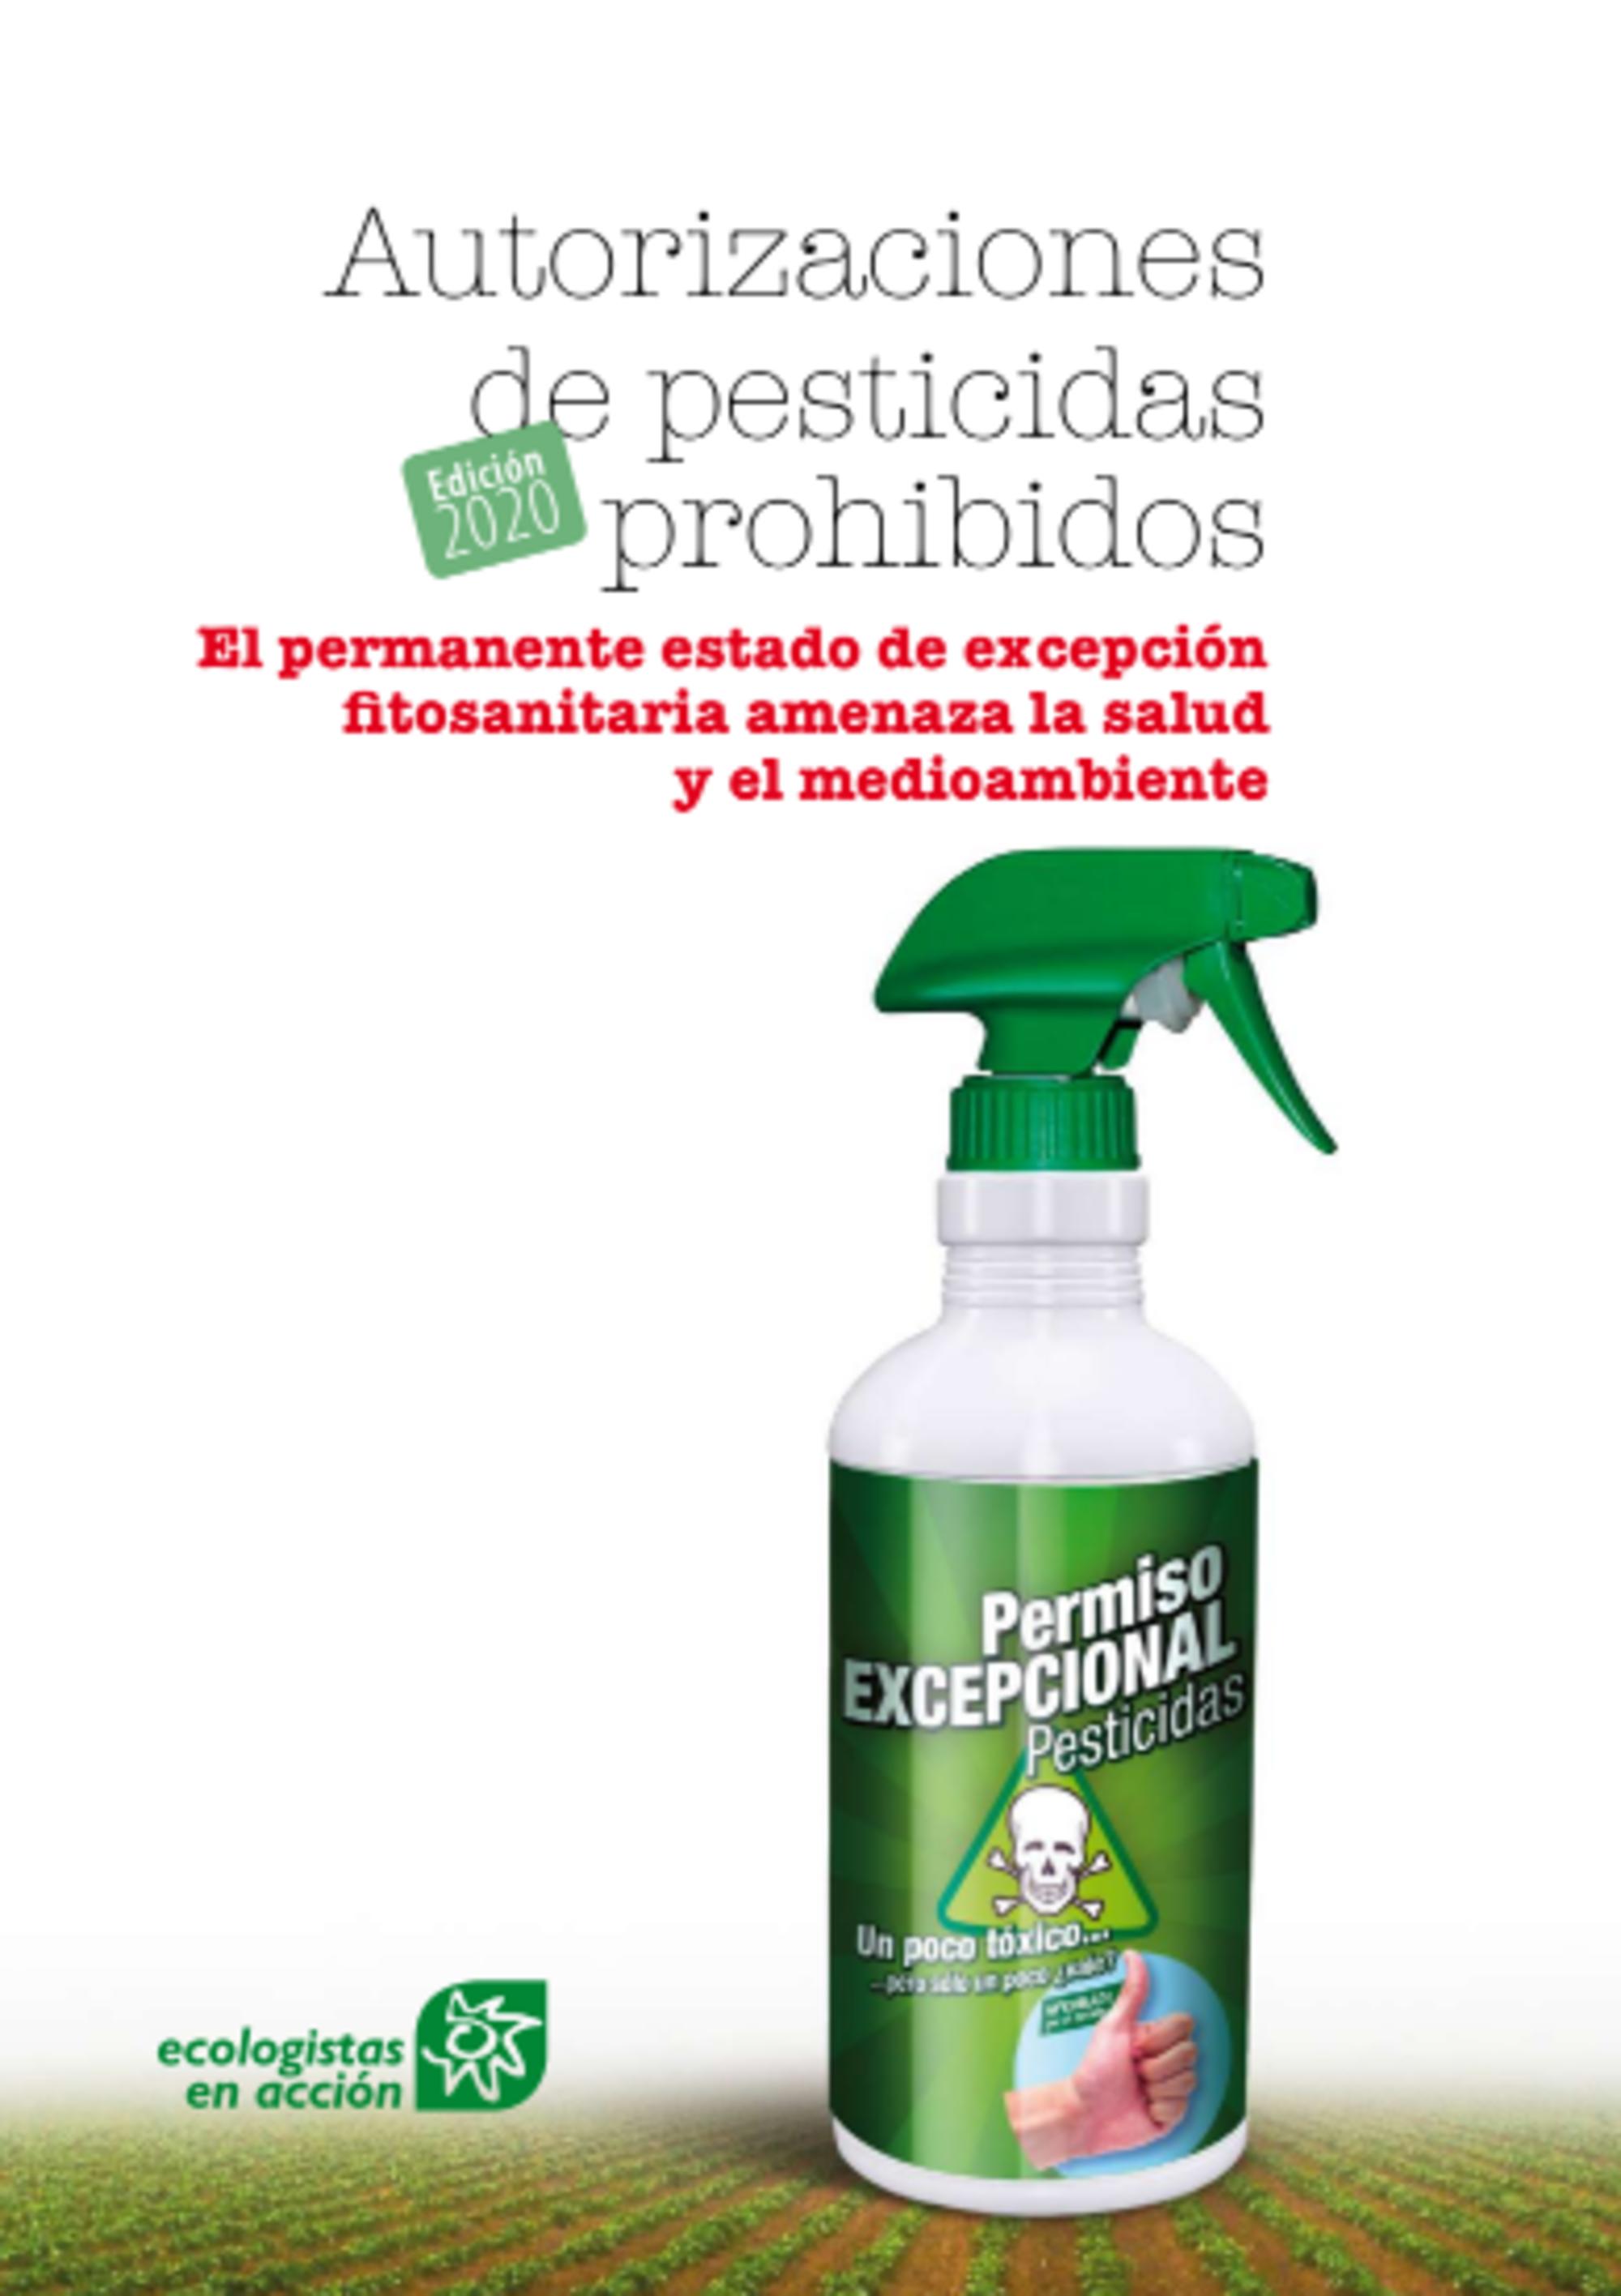 Autorizaciones de pesticidas prohibidos 